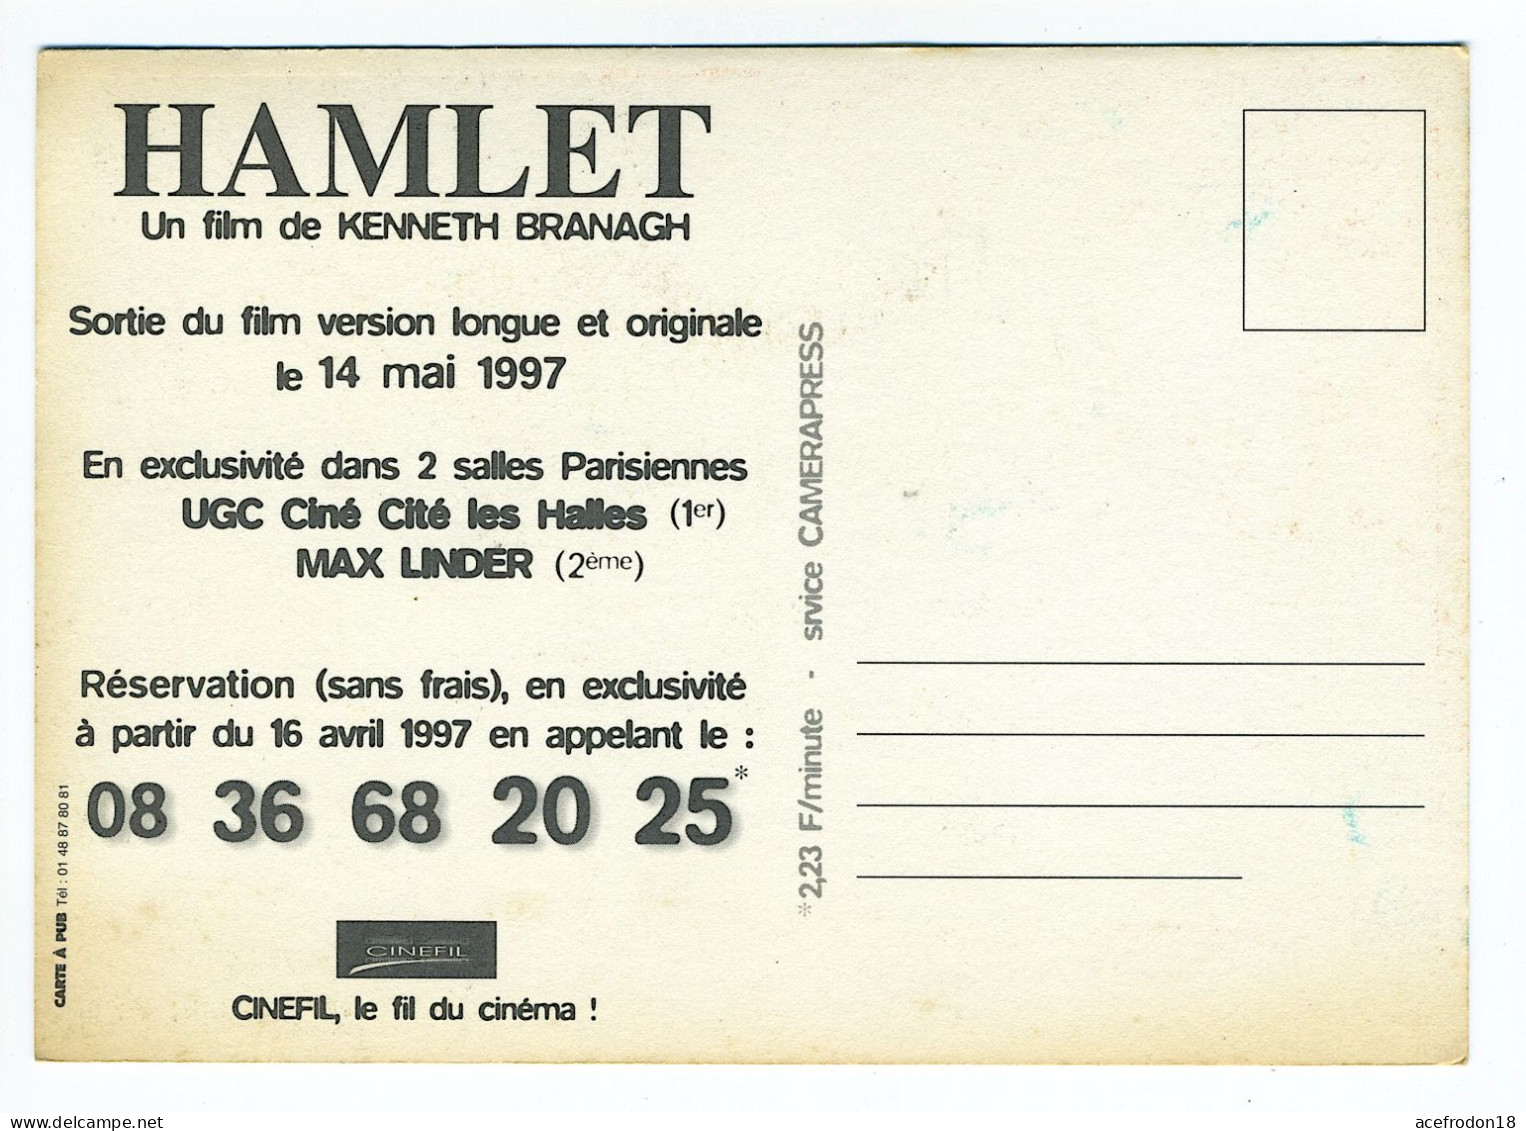 AFFICHES DE FILM - HAMLET FILM DE KENNETH BRANAGH 1997 - Posters On Cards